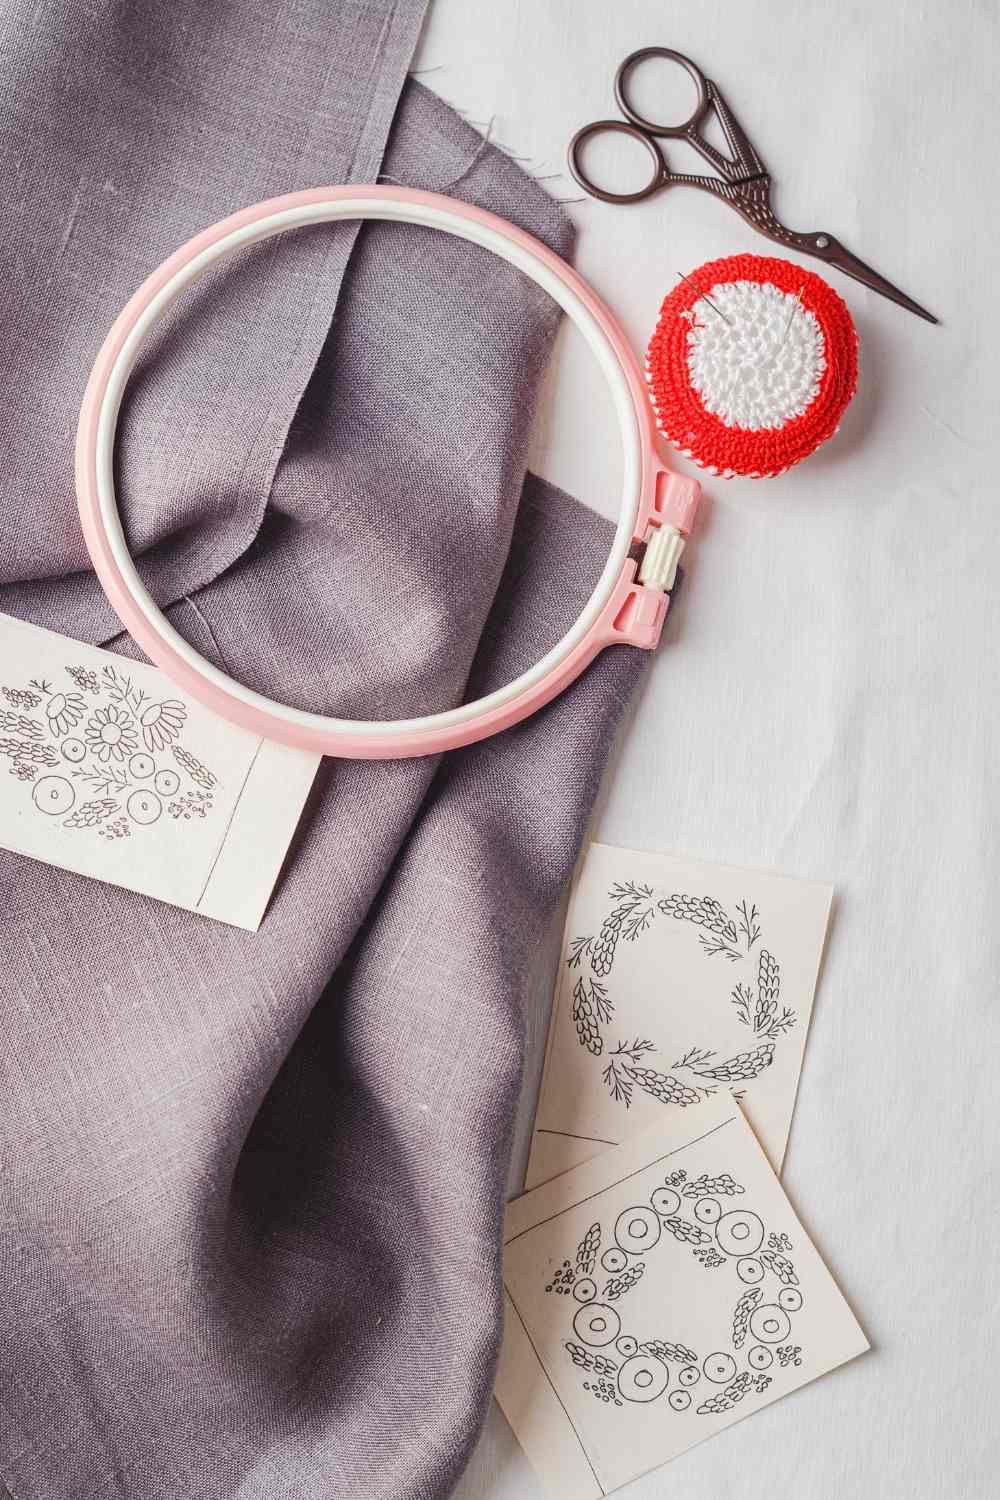 Choose the embroidery hoop